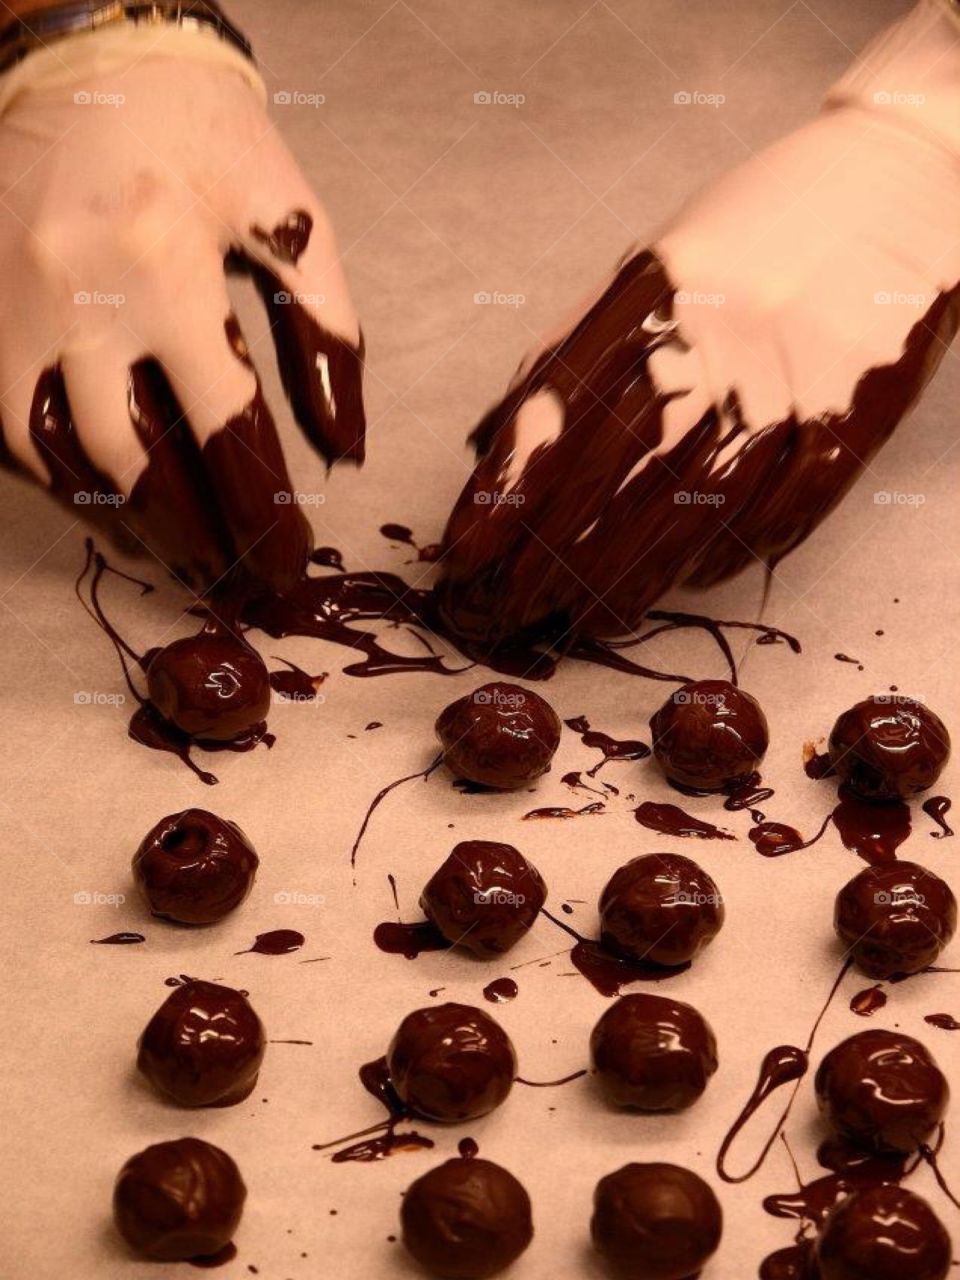 Make chocolate